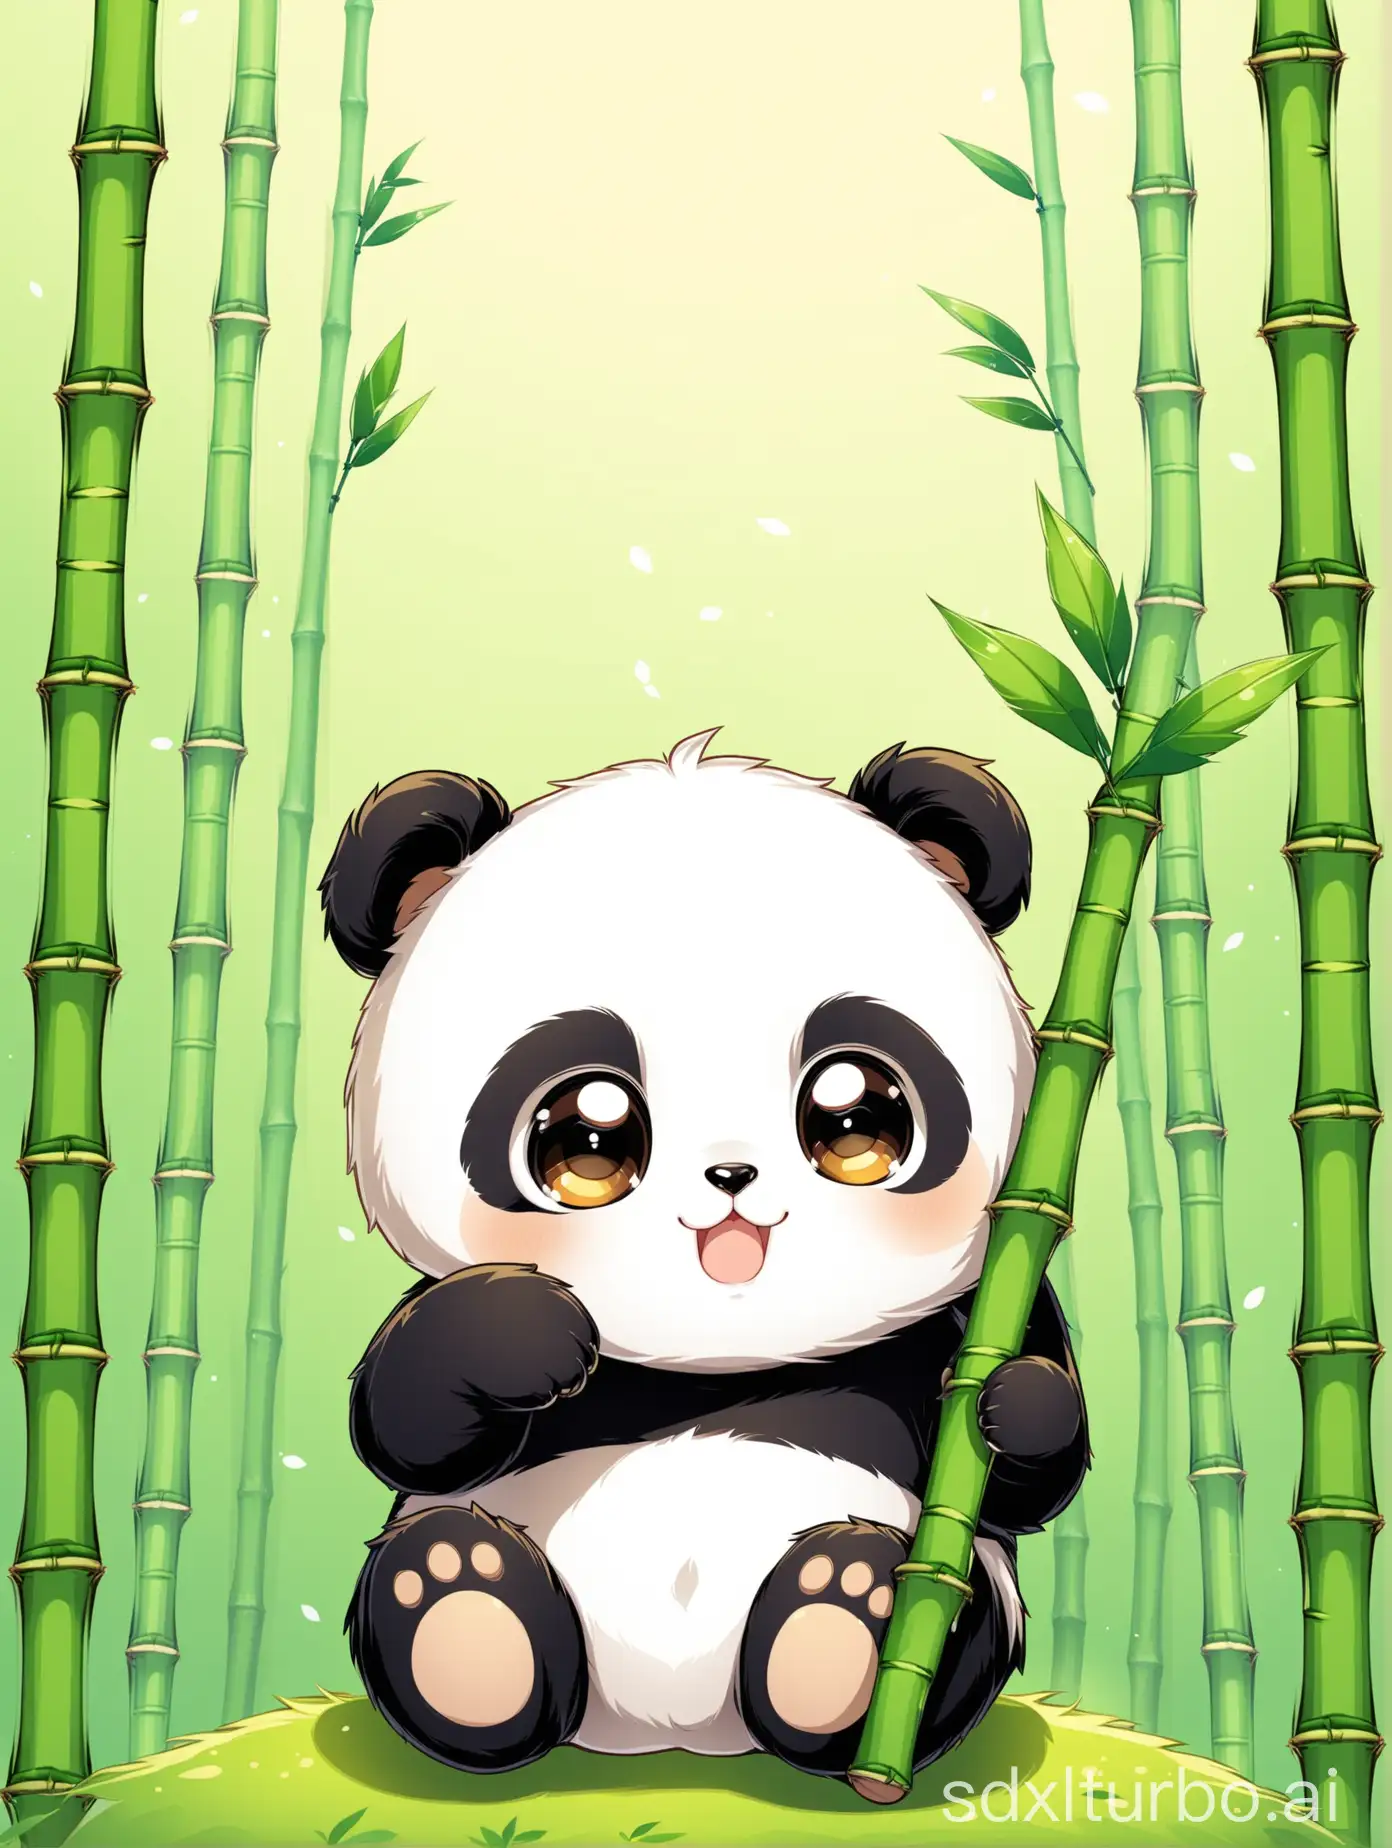 Adorable-Panda-with-Bamboo-Cute-BigEyed-Sitting-Bear-Enjoying-Bamboo-Treats